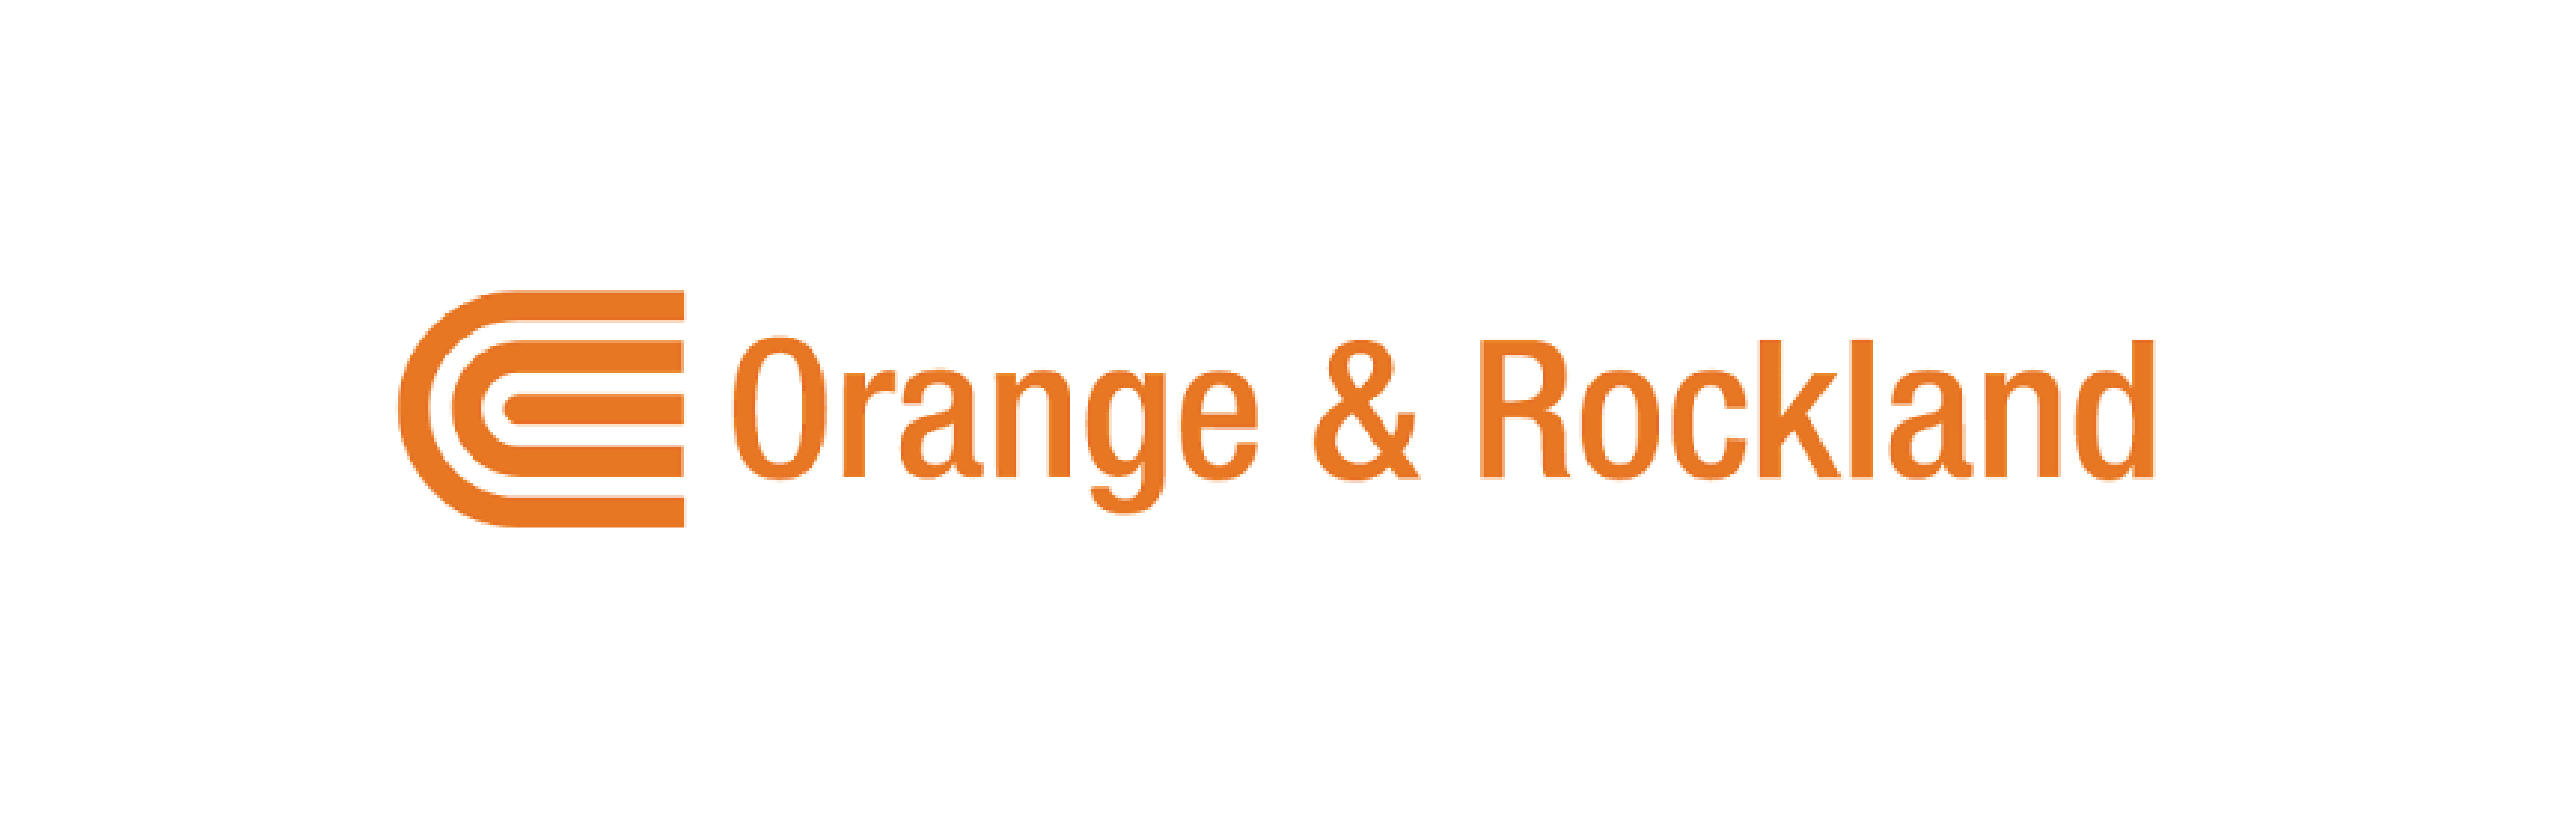 Orange And Rockland O R Utiility Logo 01 SunCommon